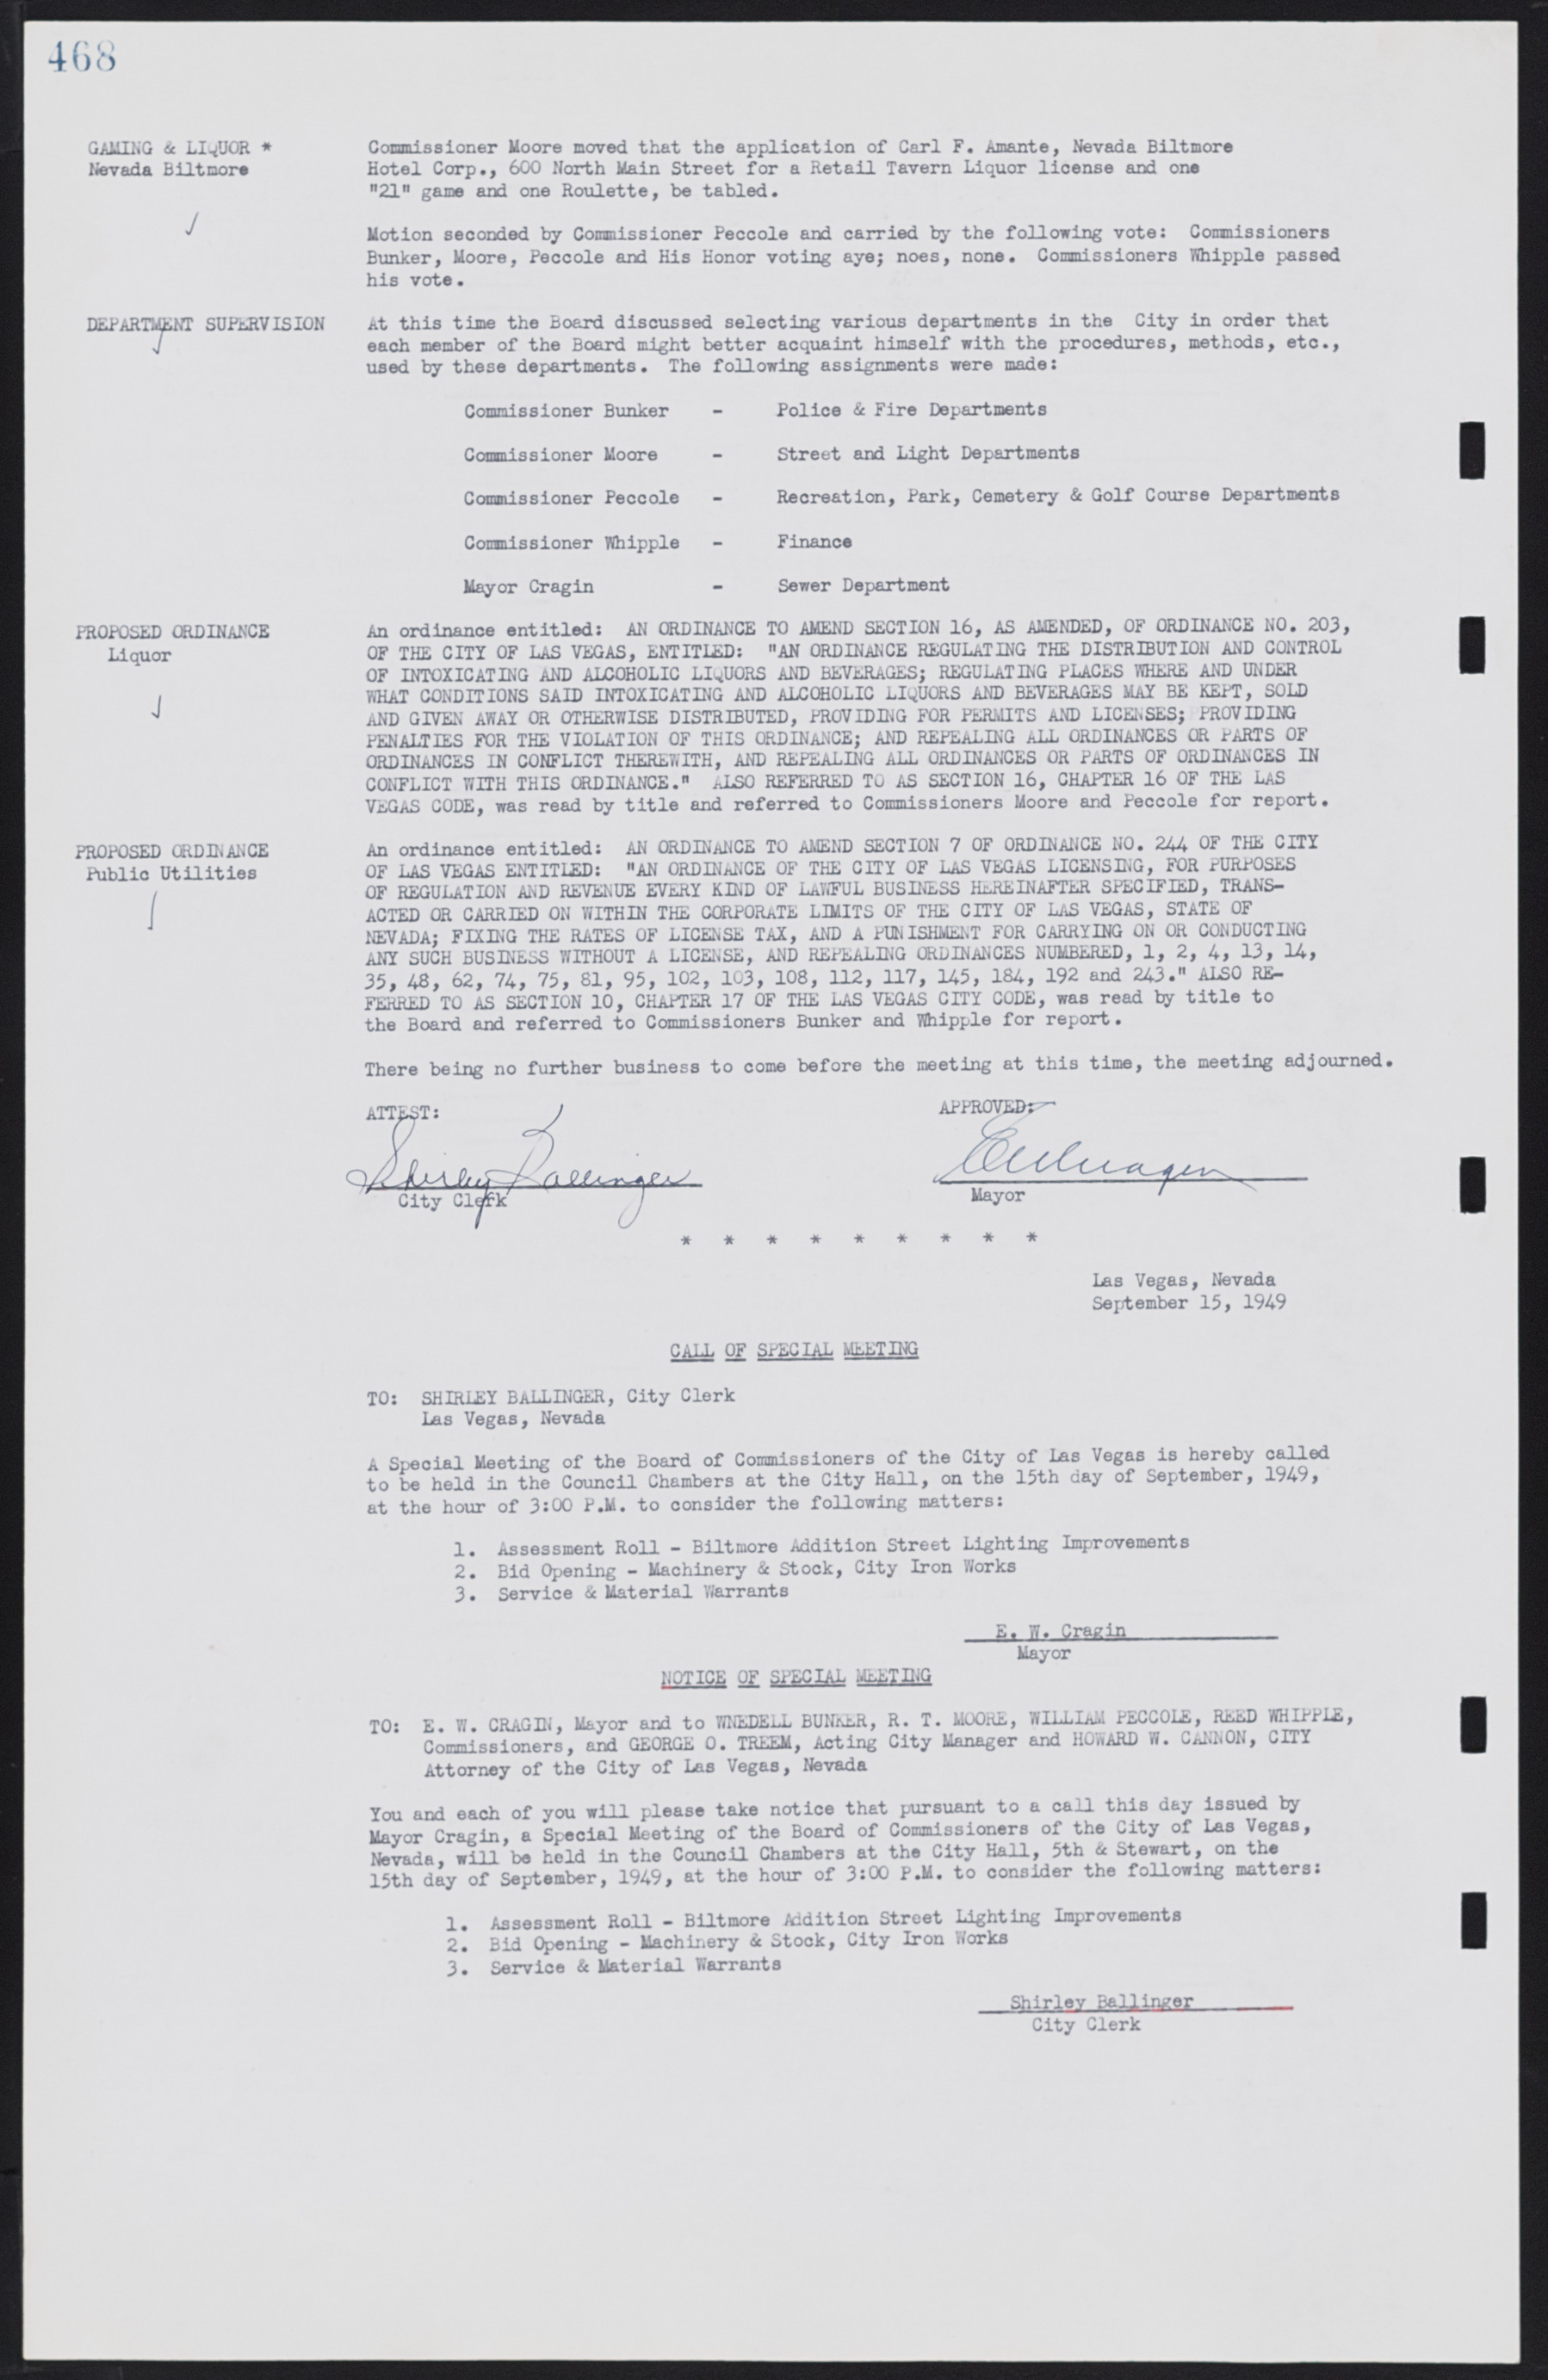 Las Vegas City Commission Minutes, January 7, 1947 to October 26, 1949, lvc000006-500